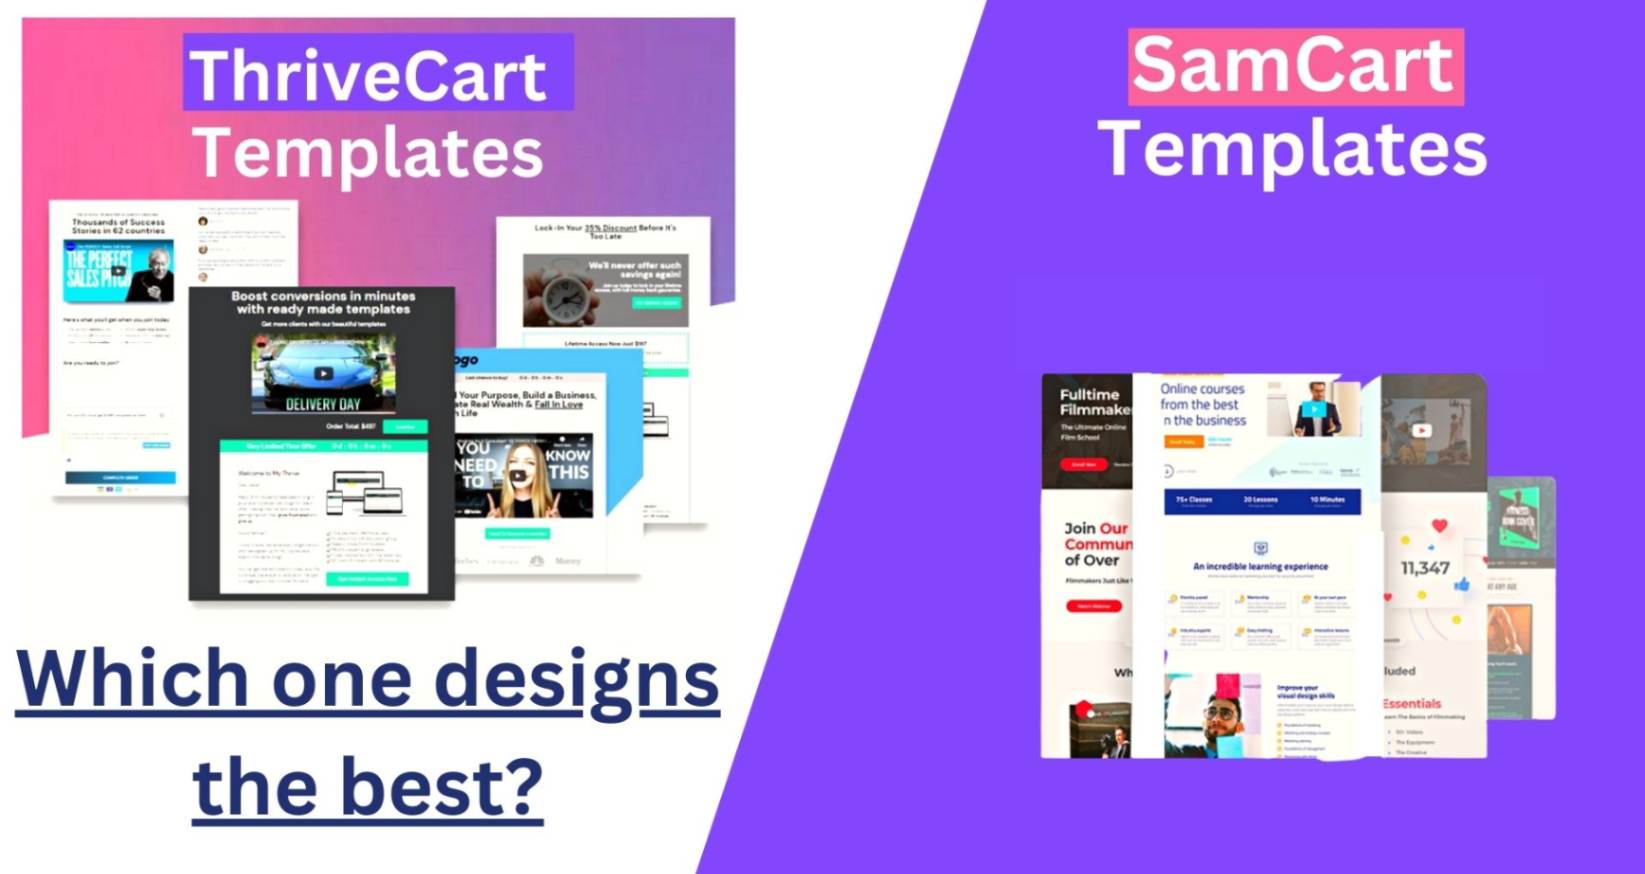 samcart vs thrivecart-template designs and customization.